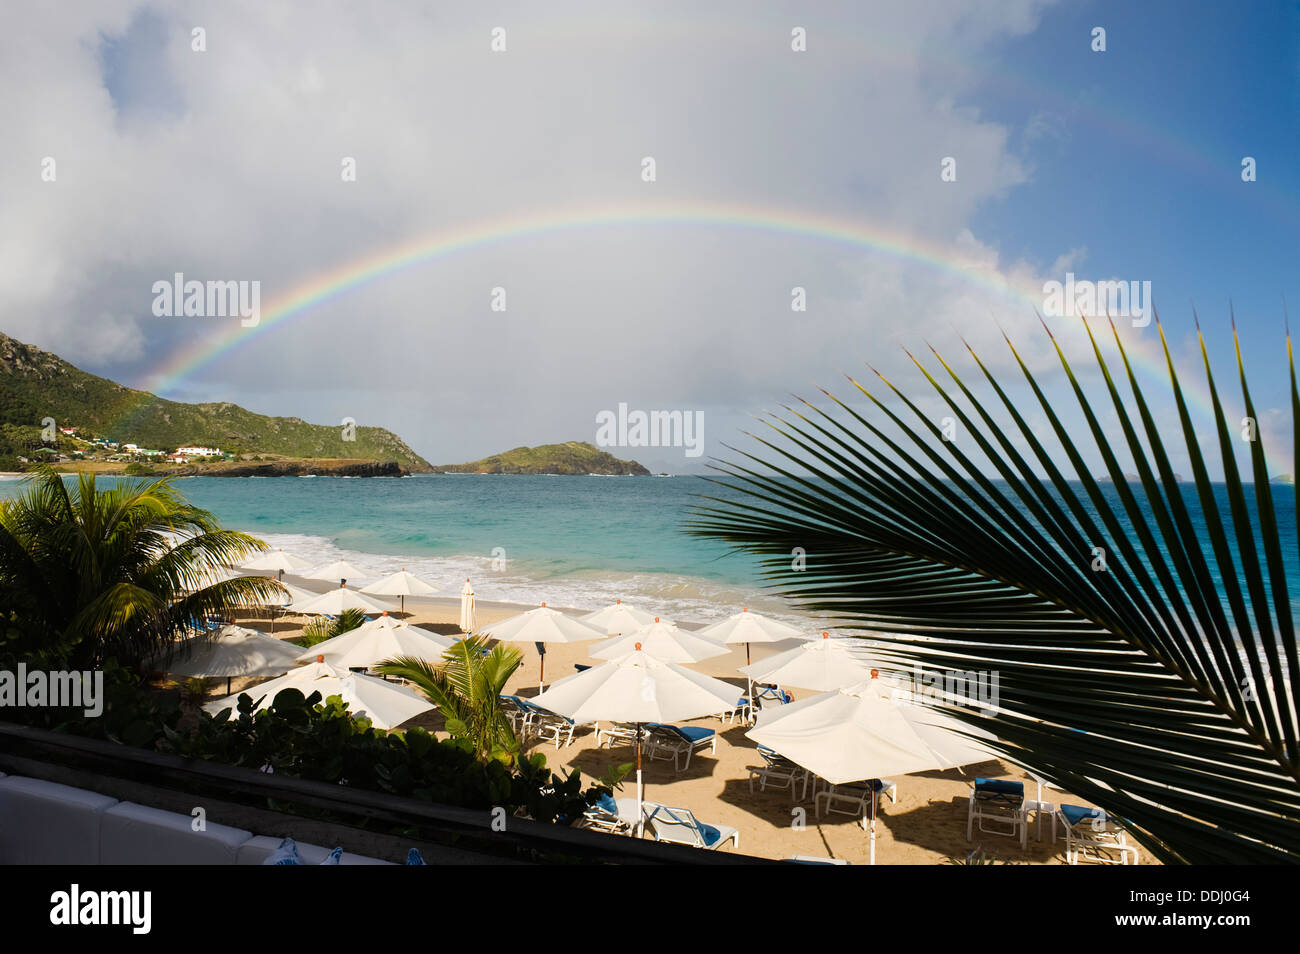 A rainbow spans Flamands Bay, Caribbean Stock Photo